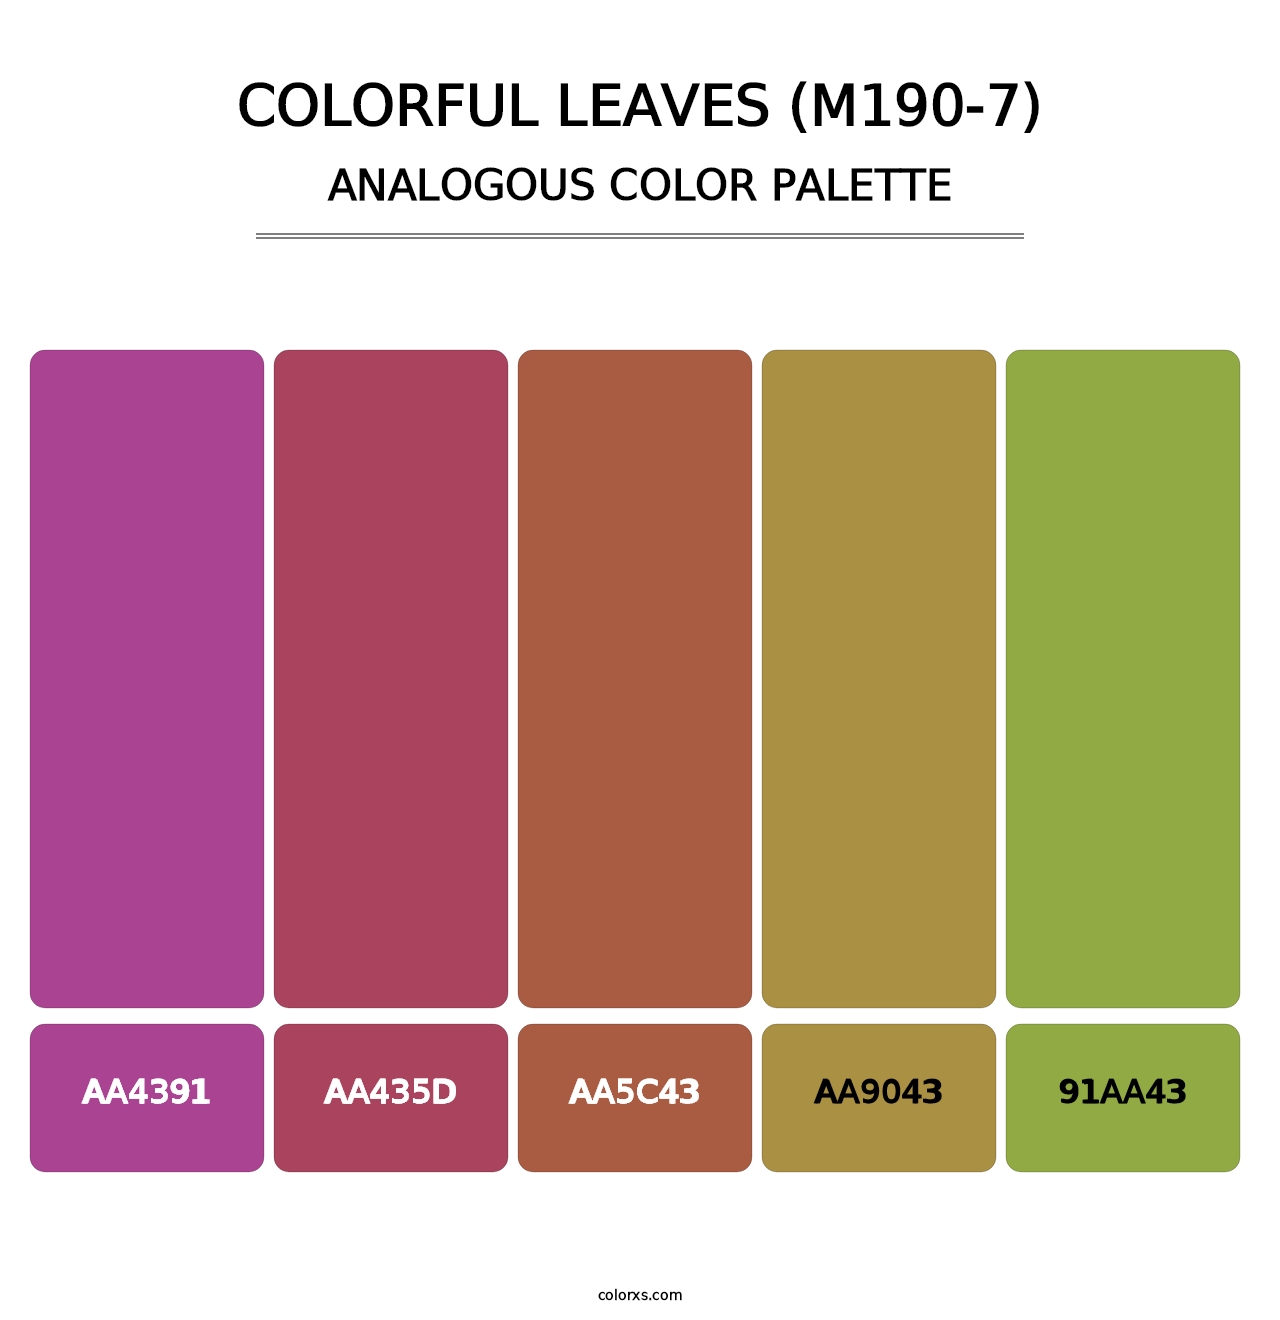 Colorful Leaves (M190-7) - Analogous Color Palette